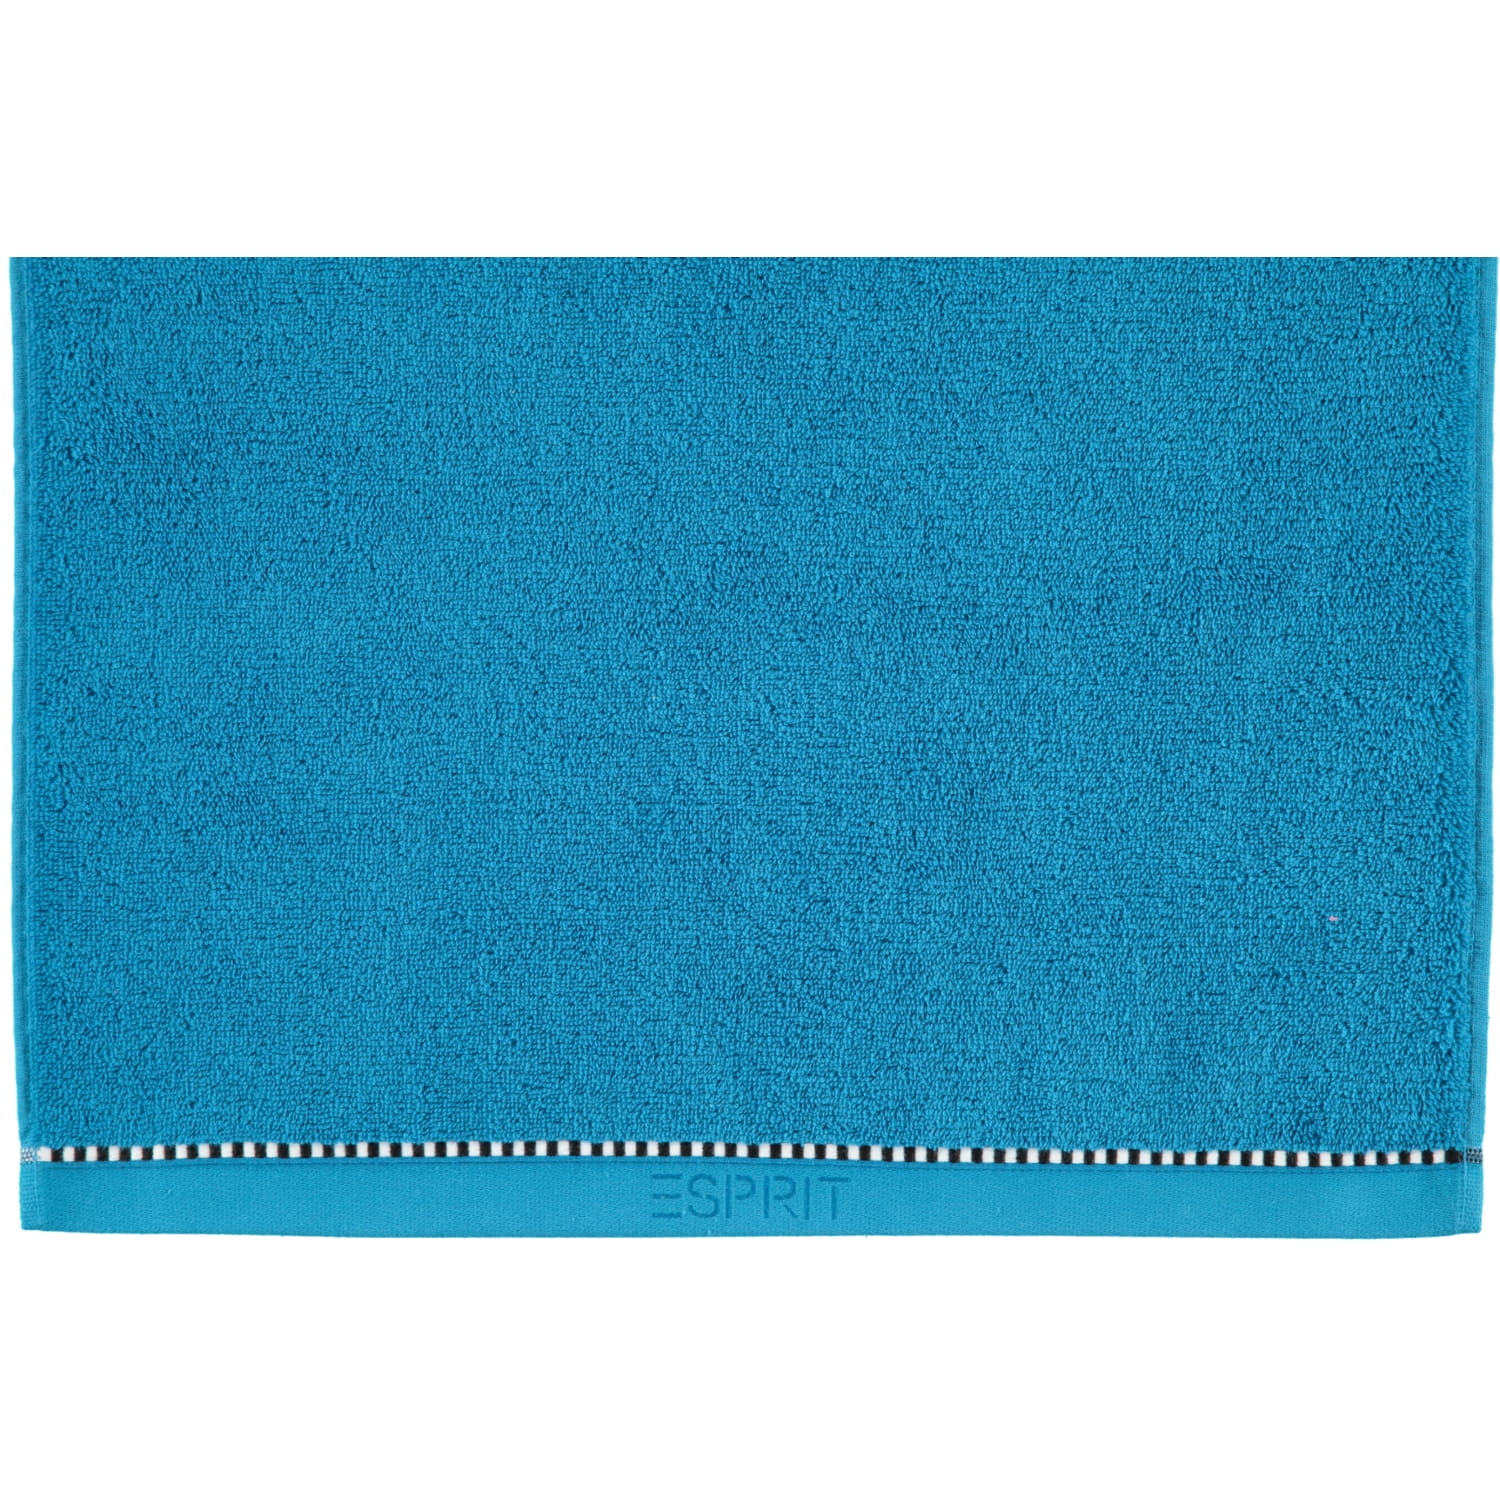 Esprit Box Solid - Farbe: ocean blue - 4665 | ESPRIT Handtücher | ESPRIT |  Marken